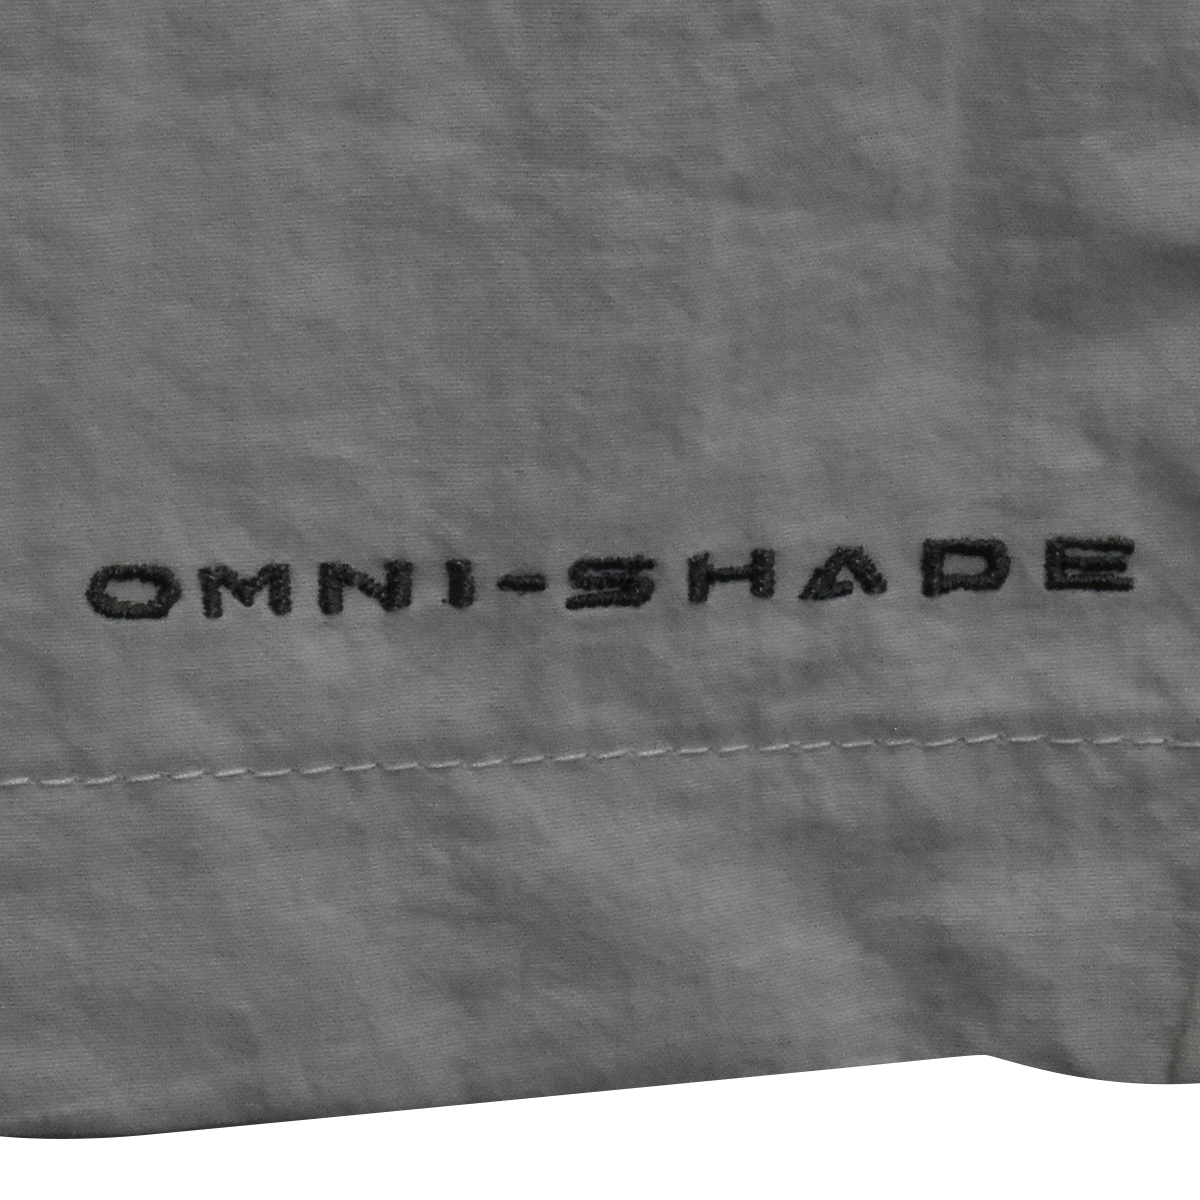 Columbia Men's Cargo Shorts Gravel PFG Bahama 8" Inseam Omni-Shade (023)